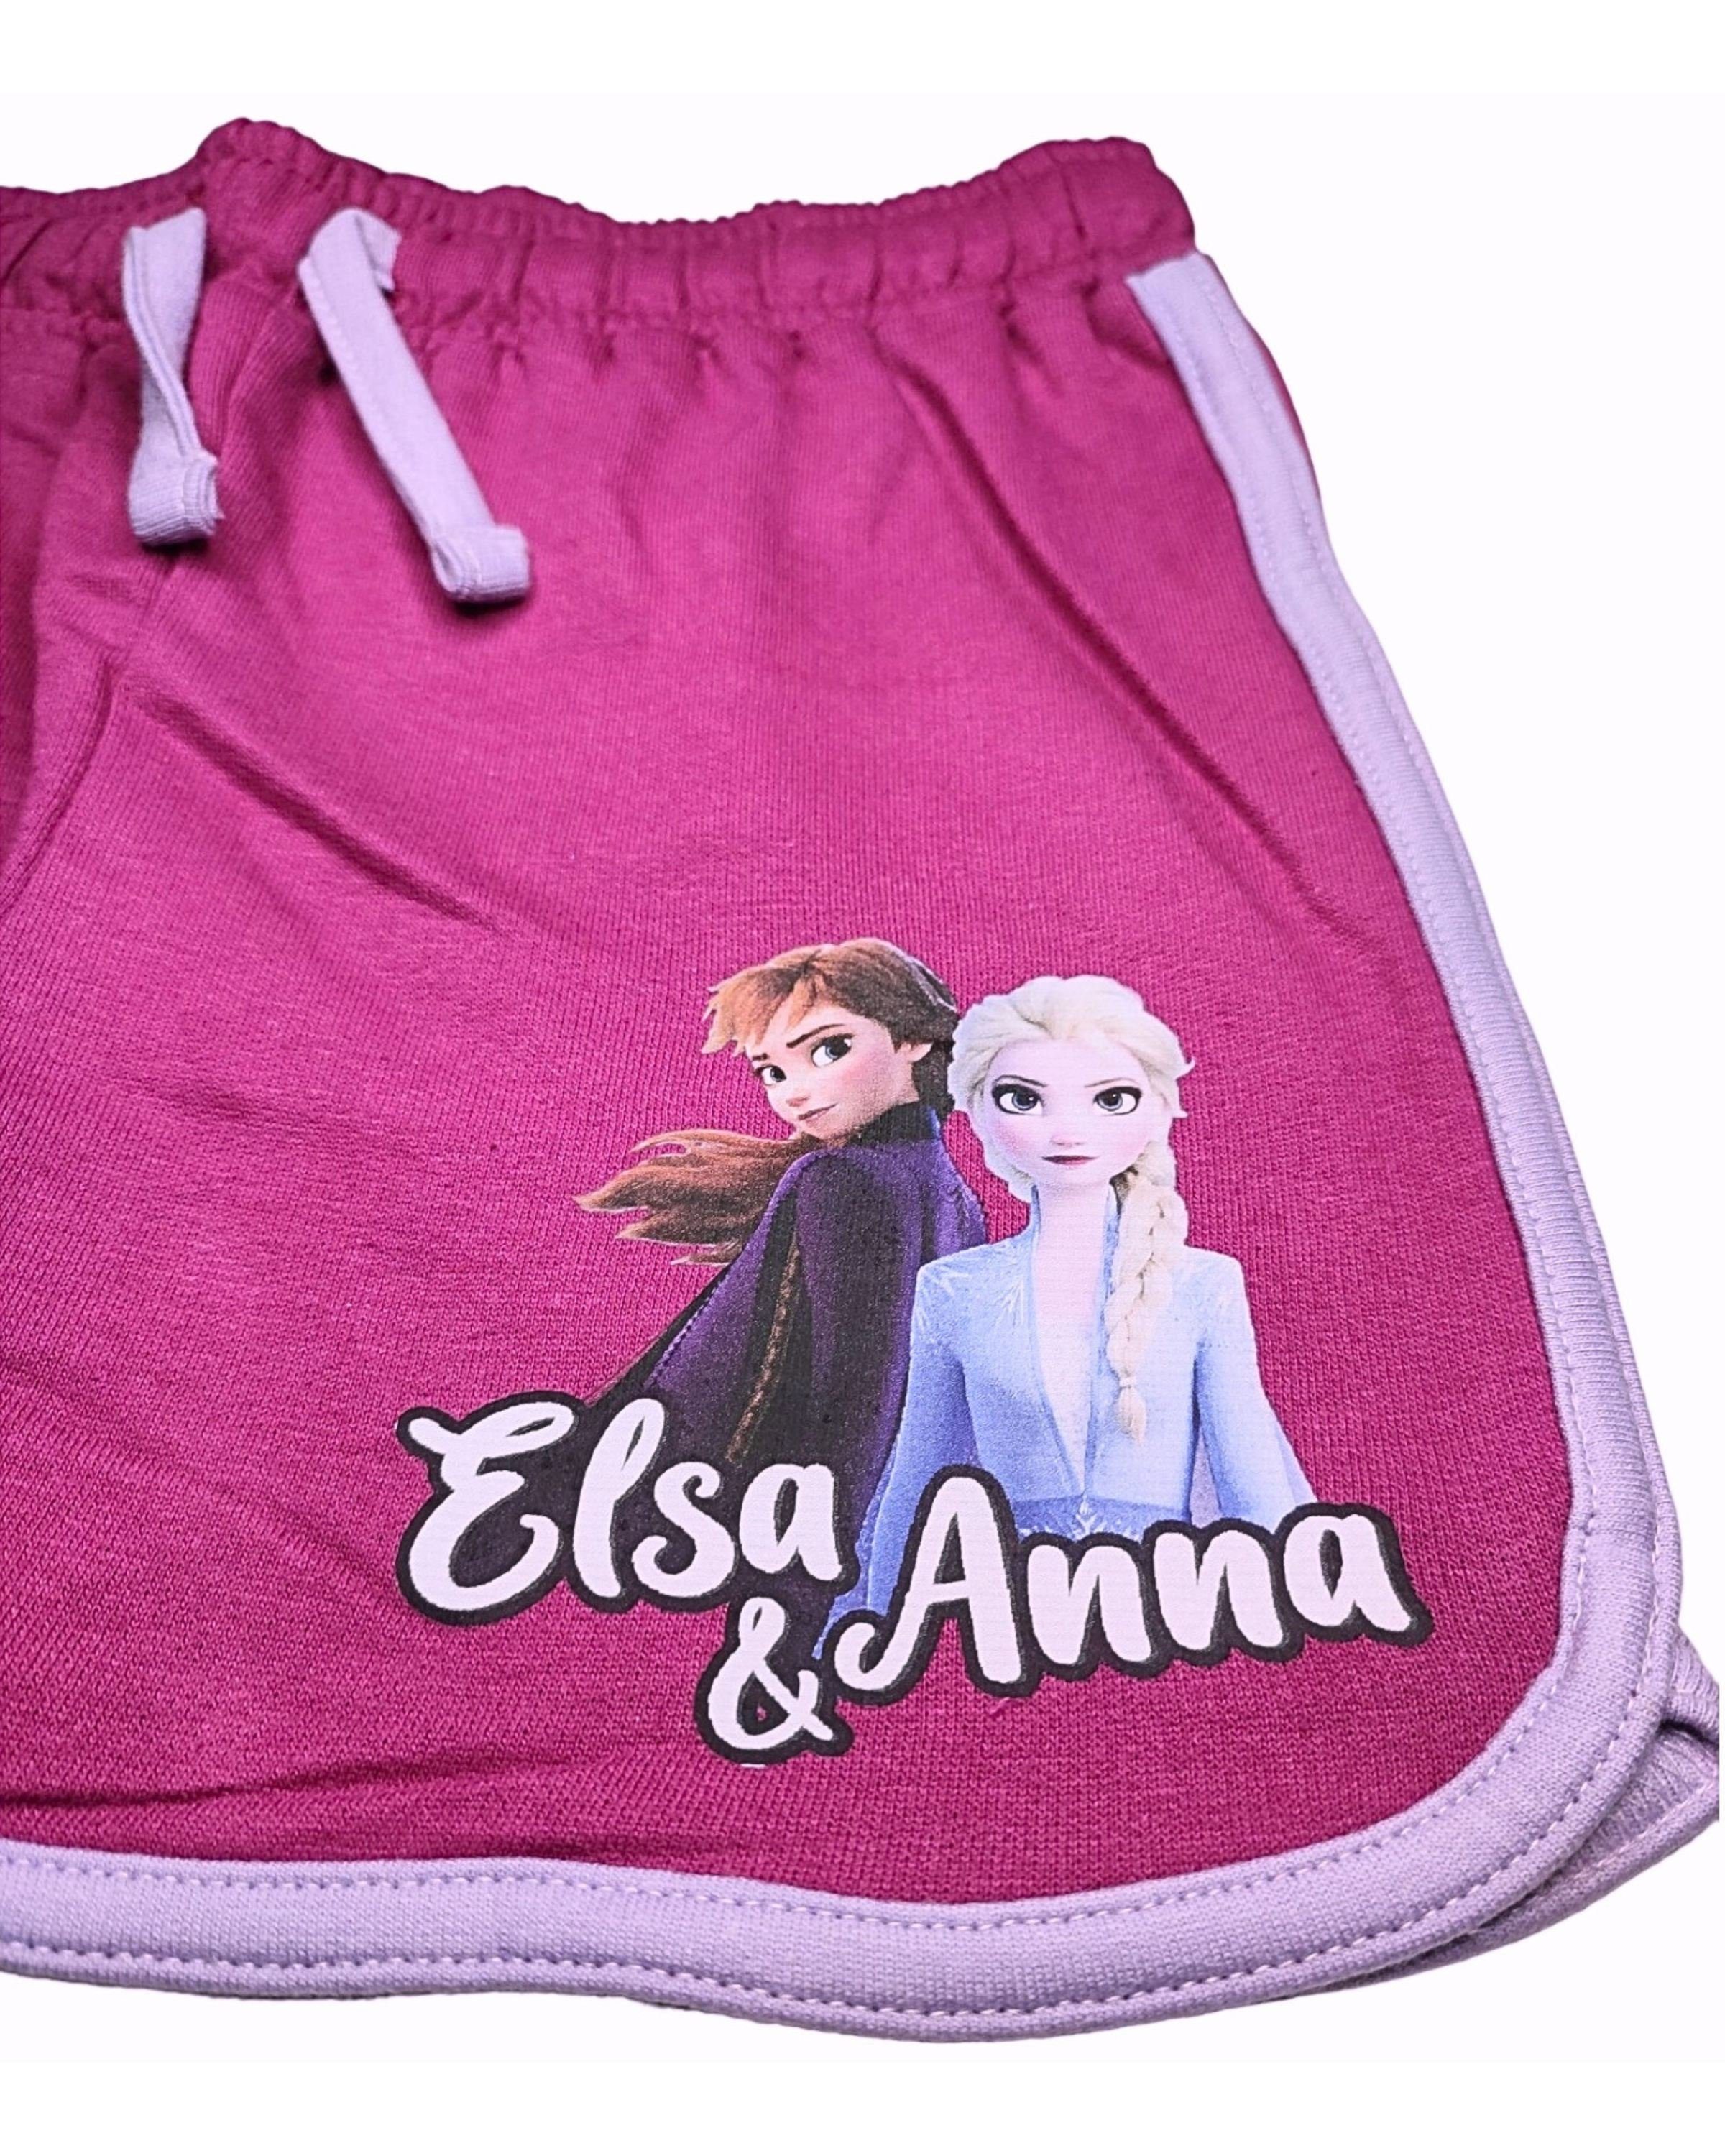 Mädchen Baumwolle cm Dunkellila Elsa - Hose & Frozen Shorts Anna 98 aus 128 Disney kurze Gr.